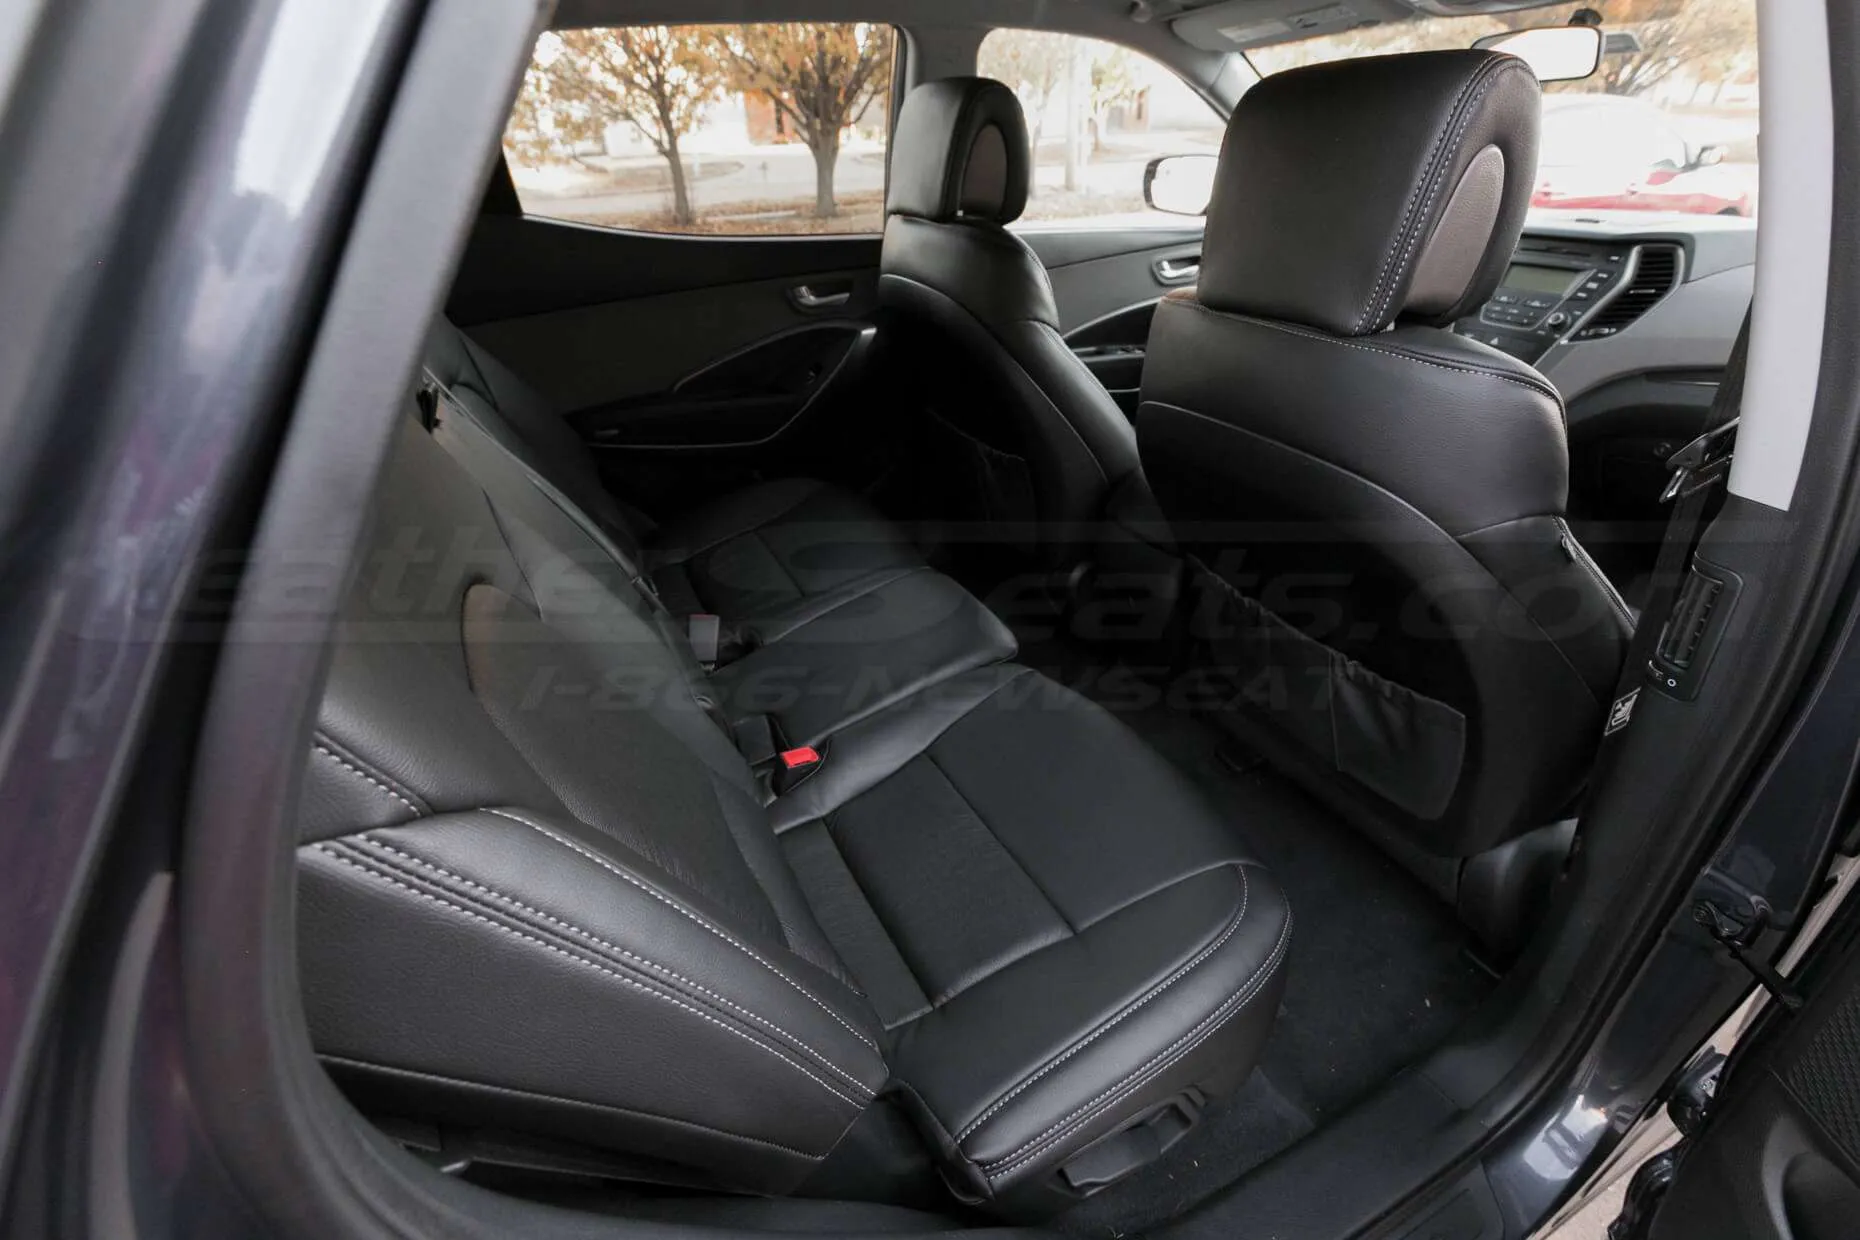 xHyundai Santa Fe Sport installed leather kit - Black - Back view of rear seats